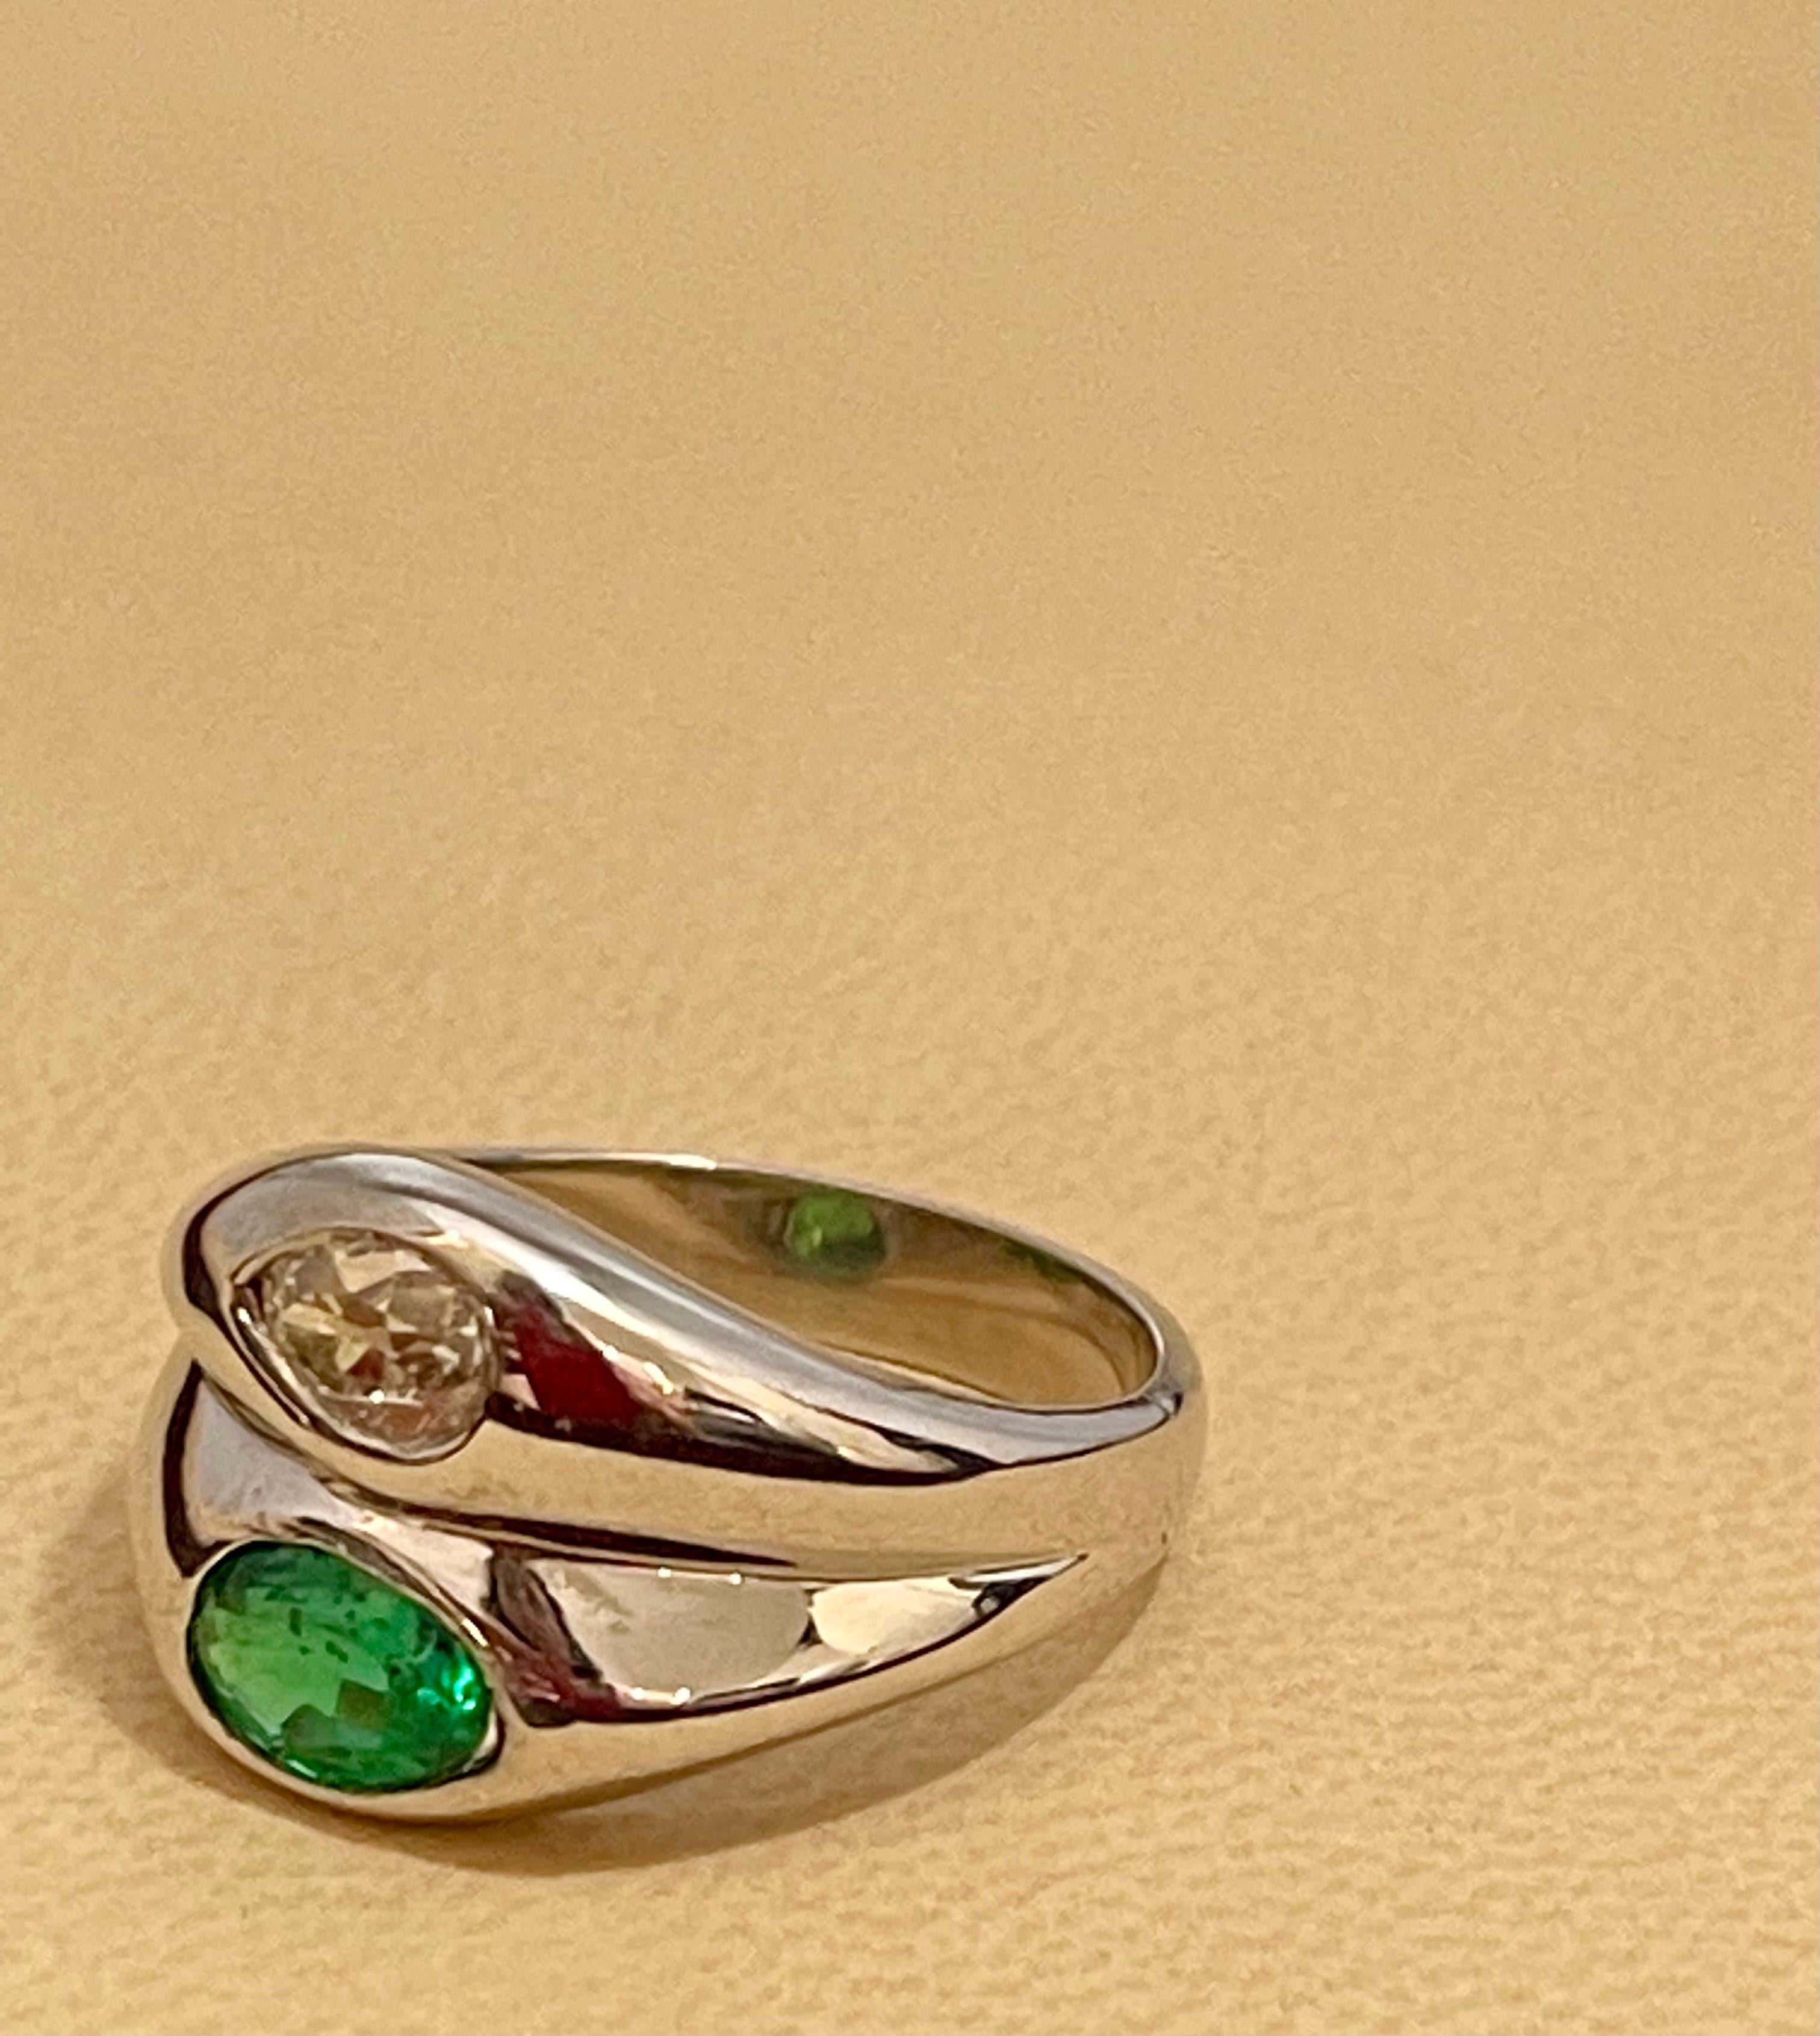 1 Carat Pear Cut Emerald and 0.8ct Diamond Ring 14 Karat White Gold 6